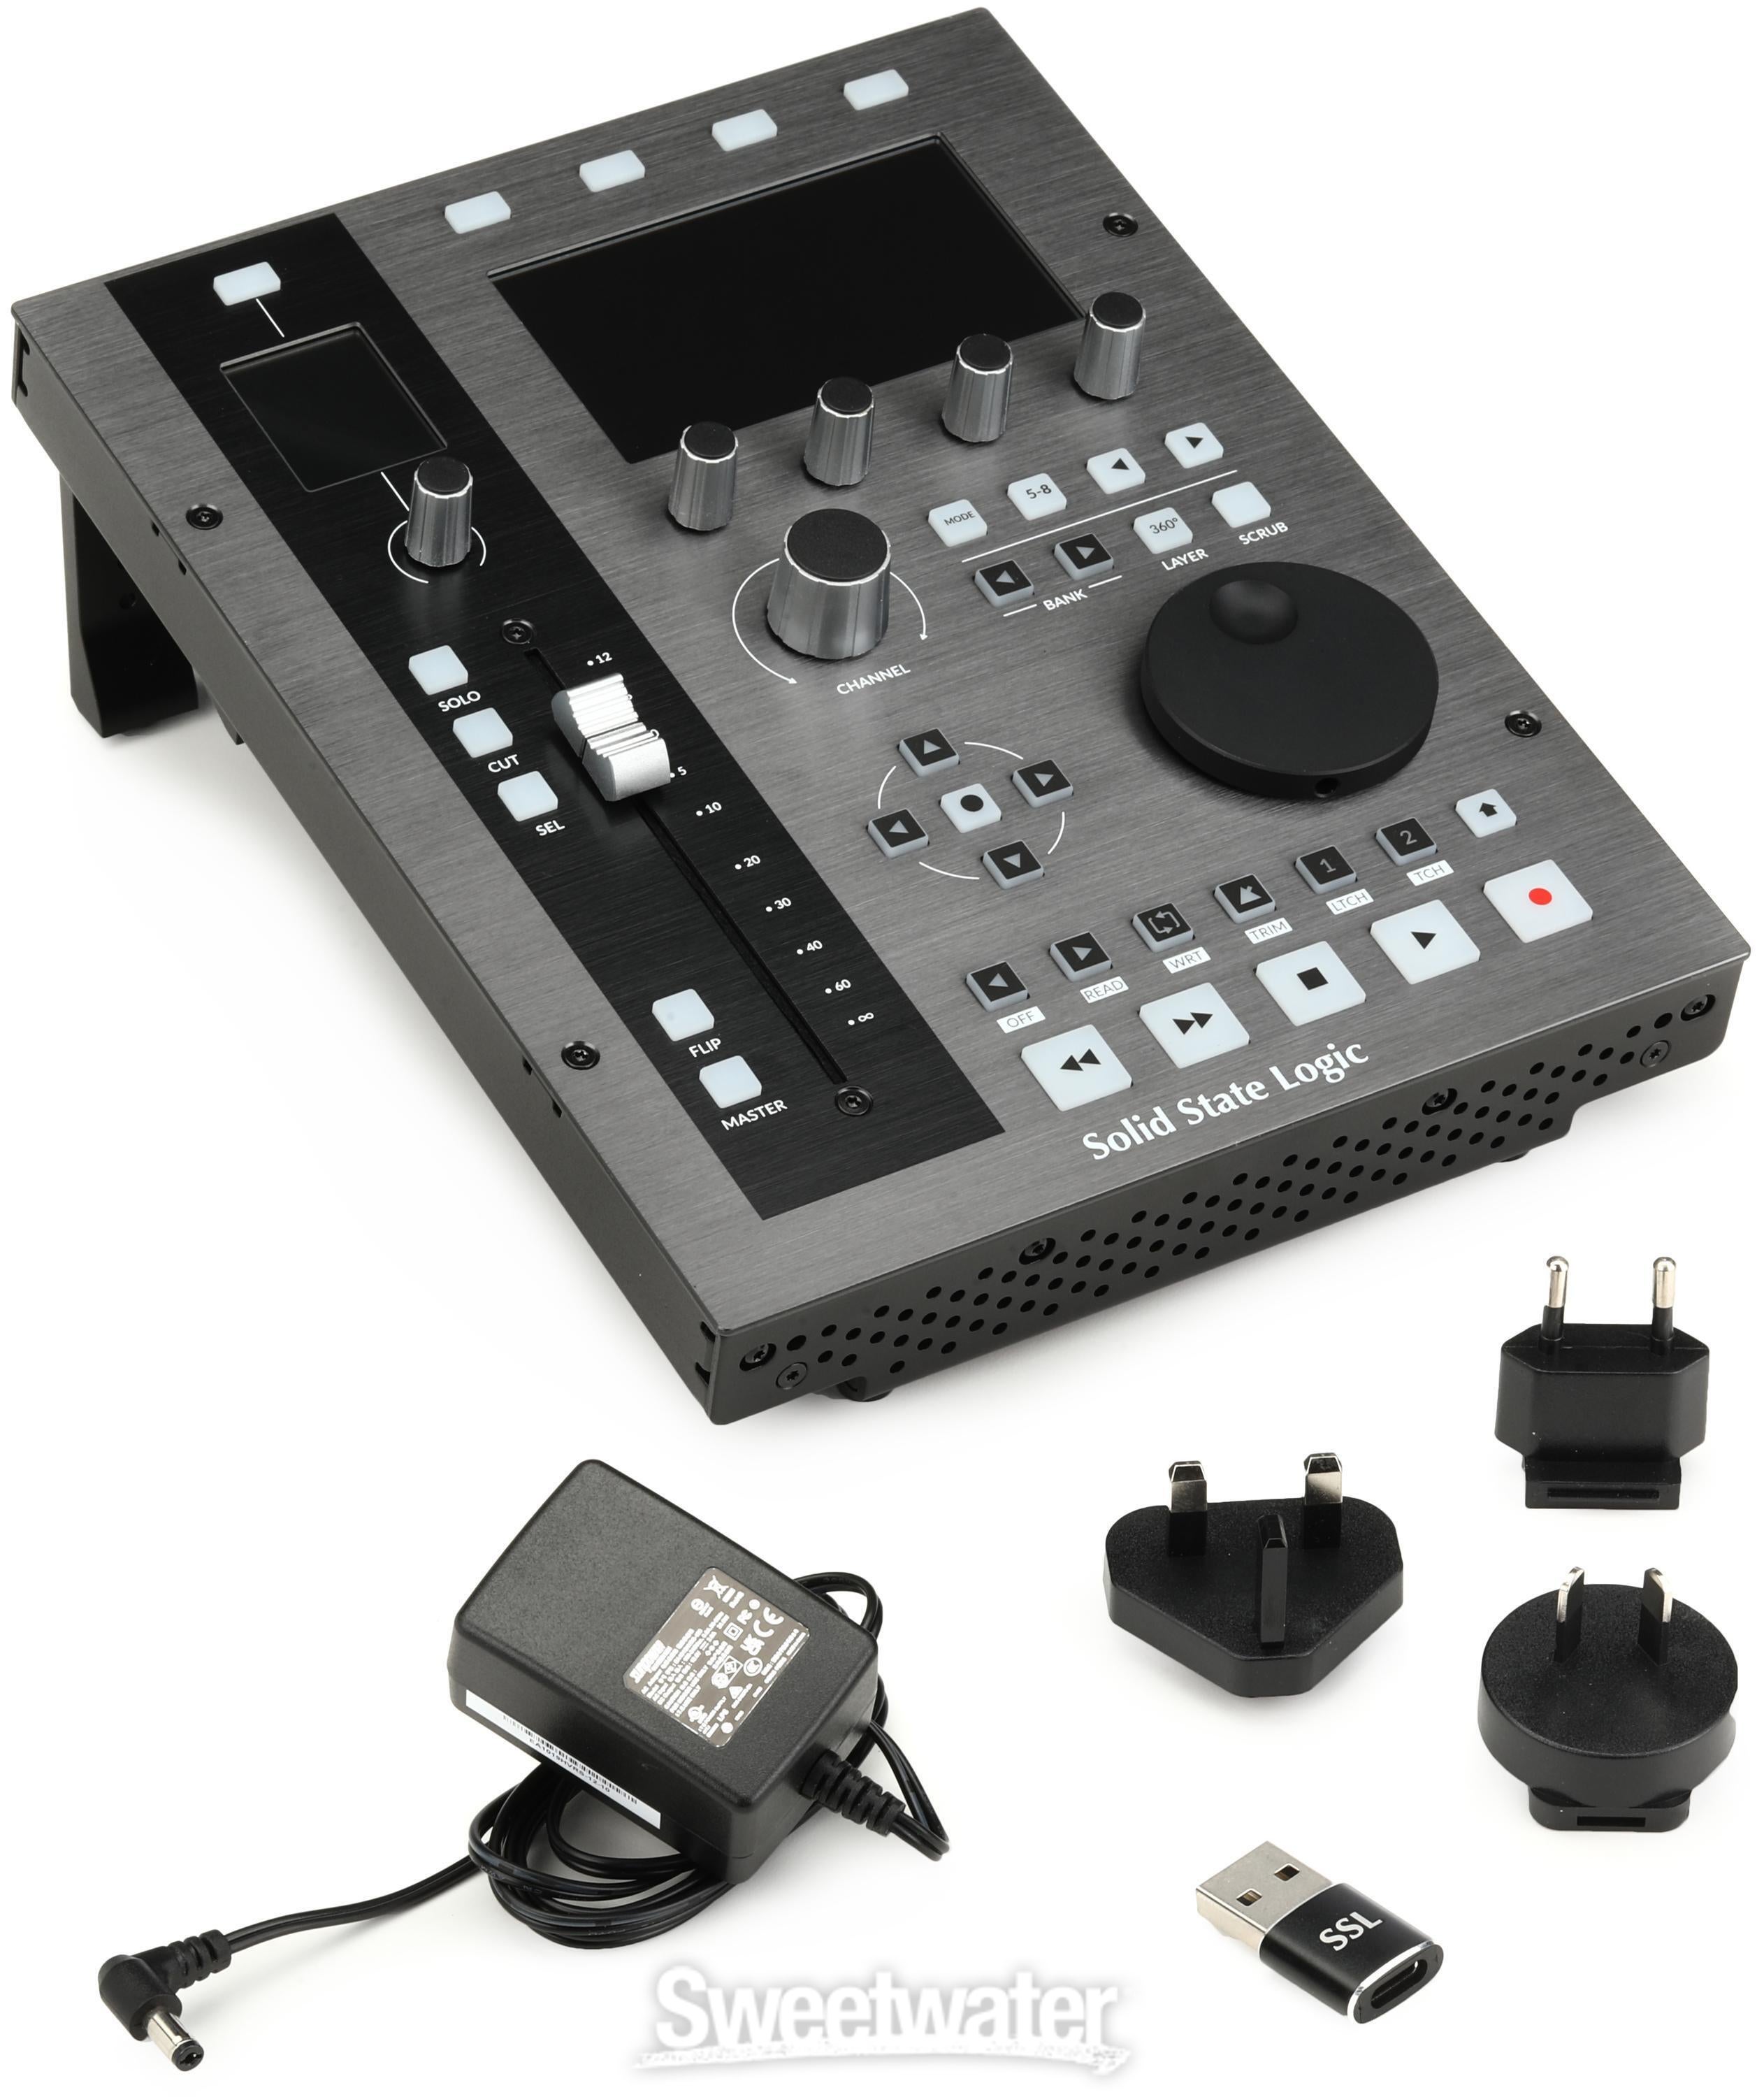 Solid State Logic UF1 Advanced DAW Controller